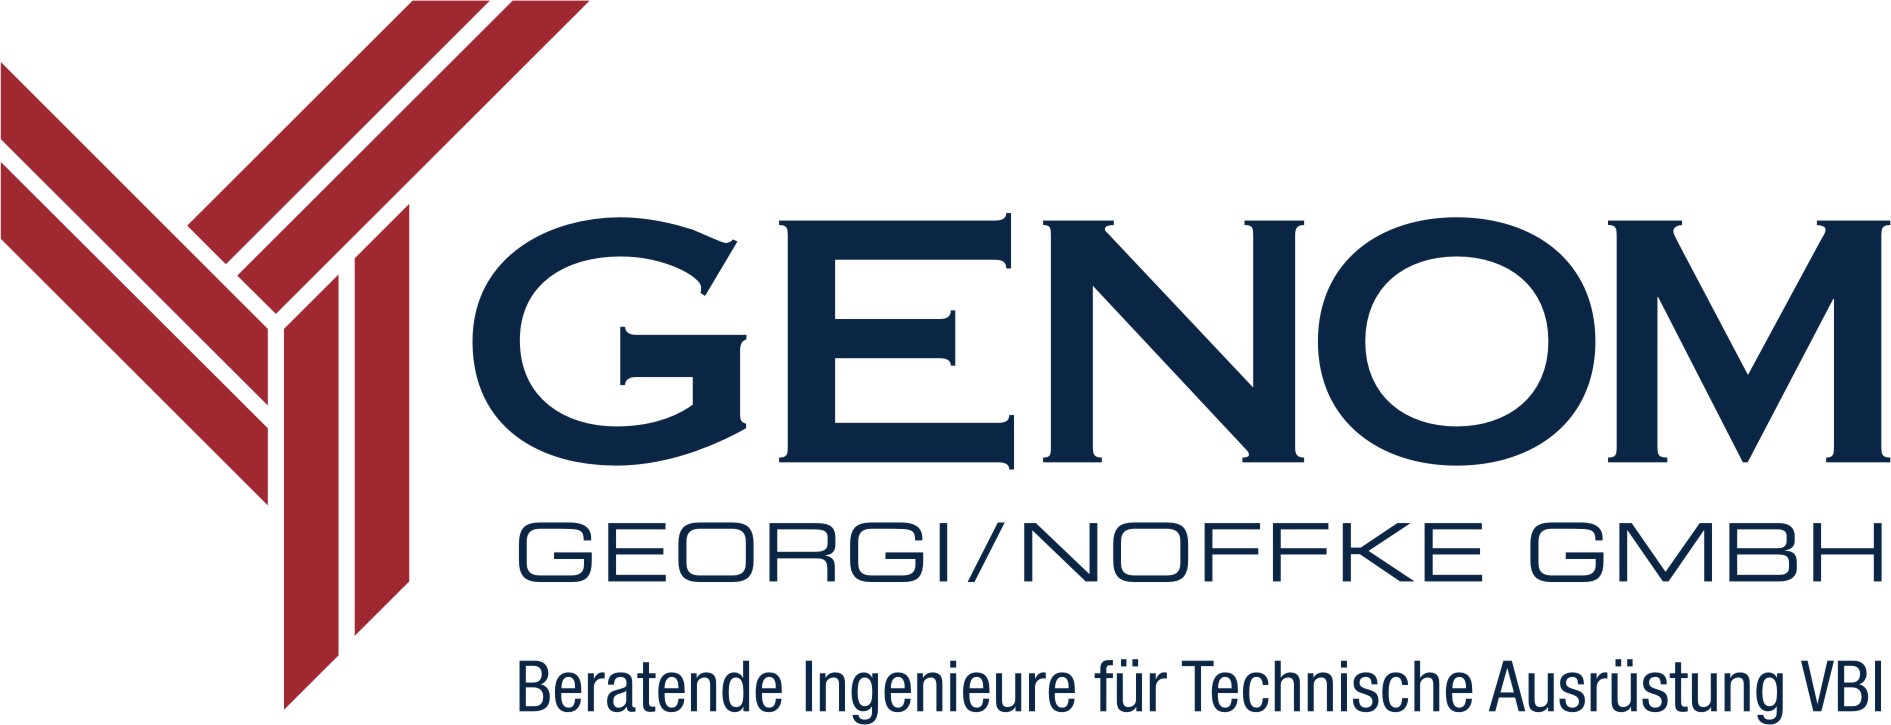 Ingenieurbüro GENOM Georgi / Noffke GmbH in Zittau